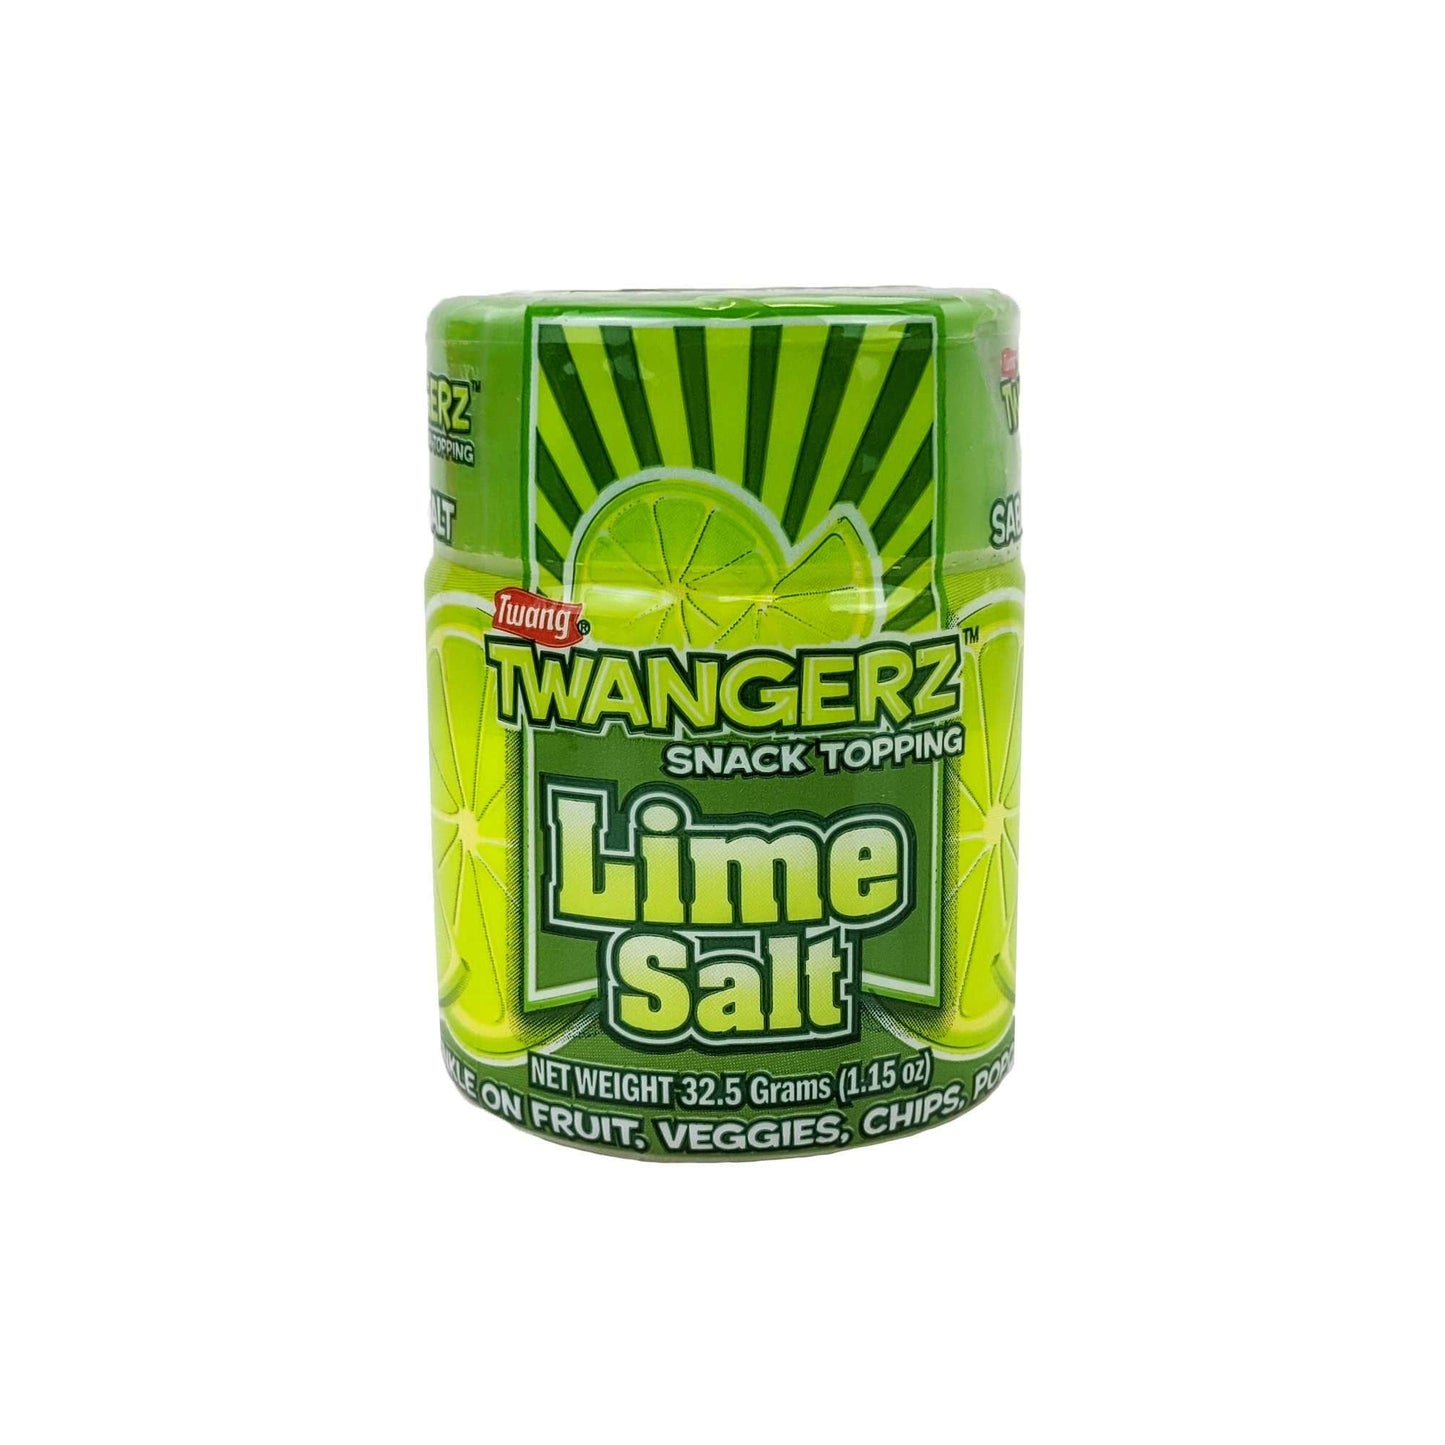 Lime Flavor Twang Twangerz Snack Topping, 1 Shaker